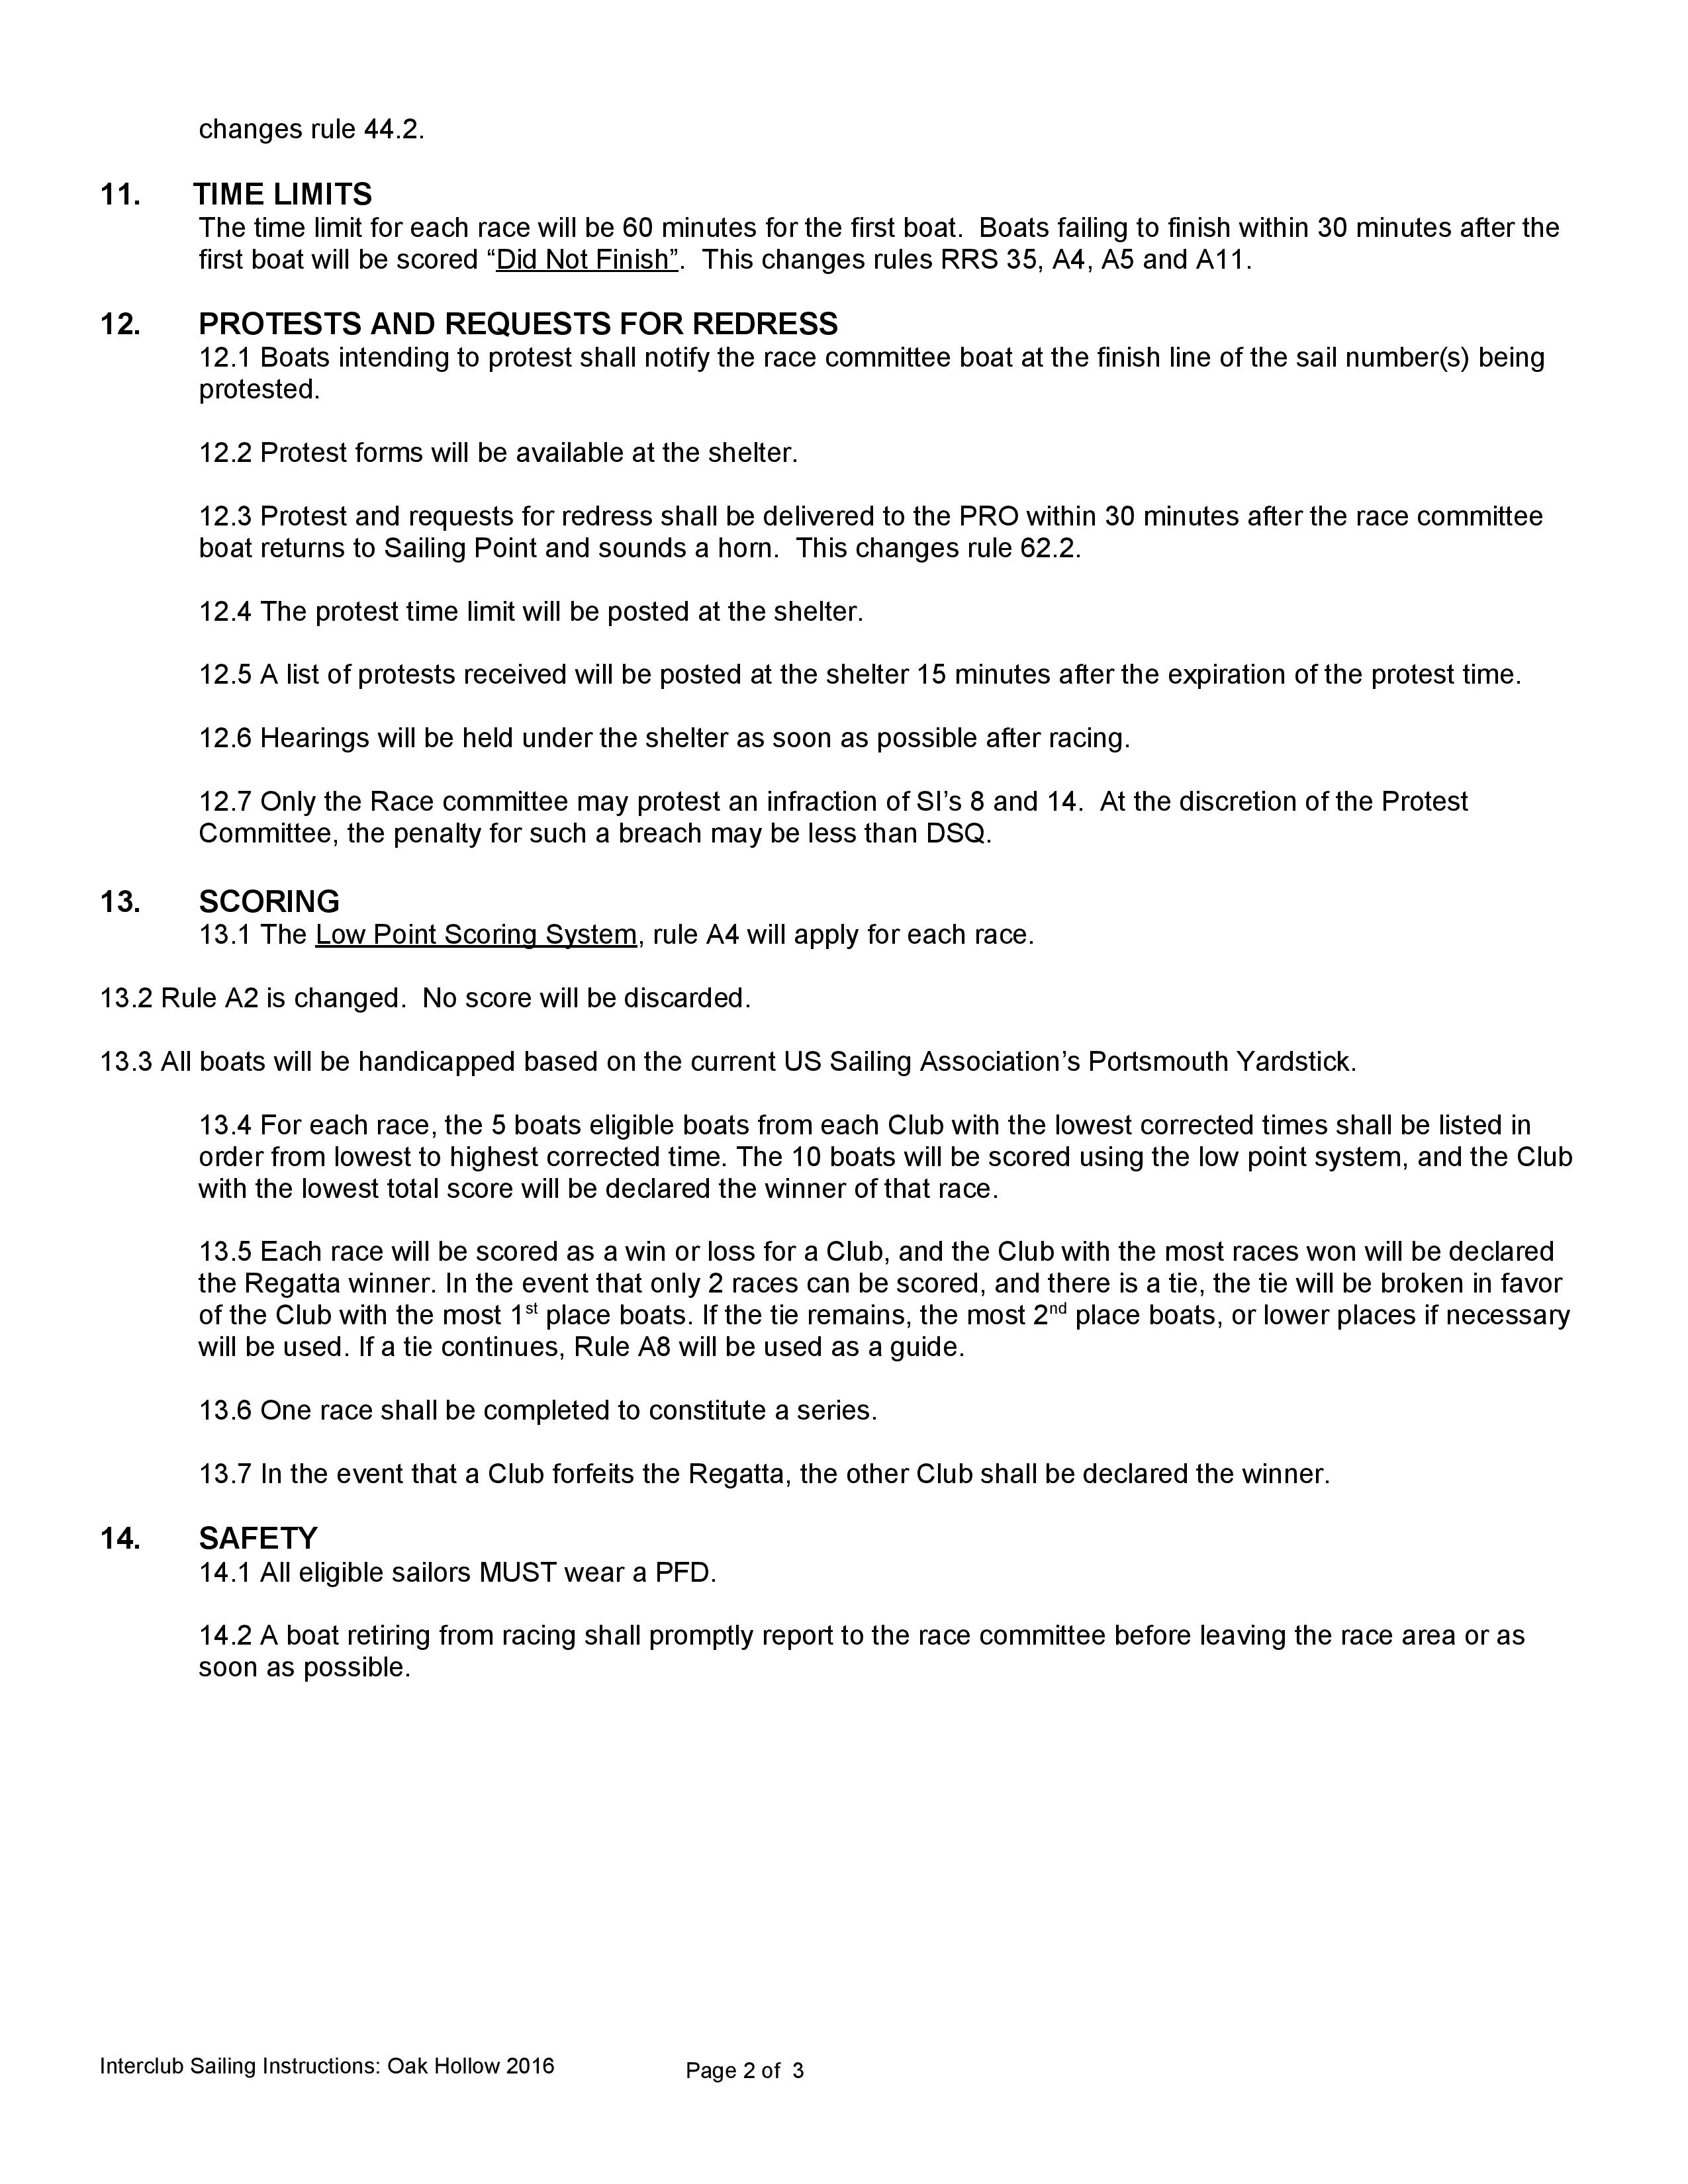 2016-oak-hollow-interclub-sailing-instructions-page-002